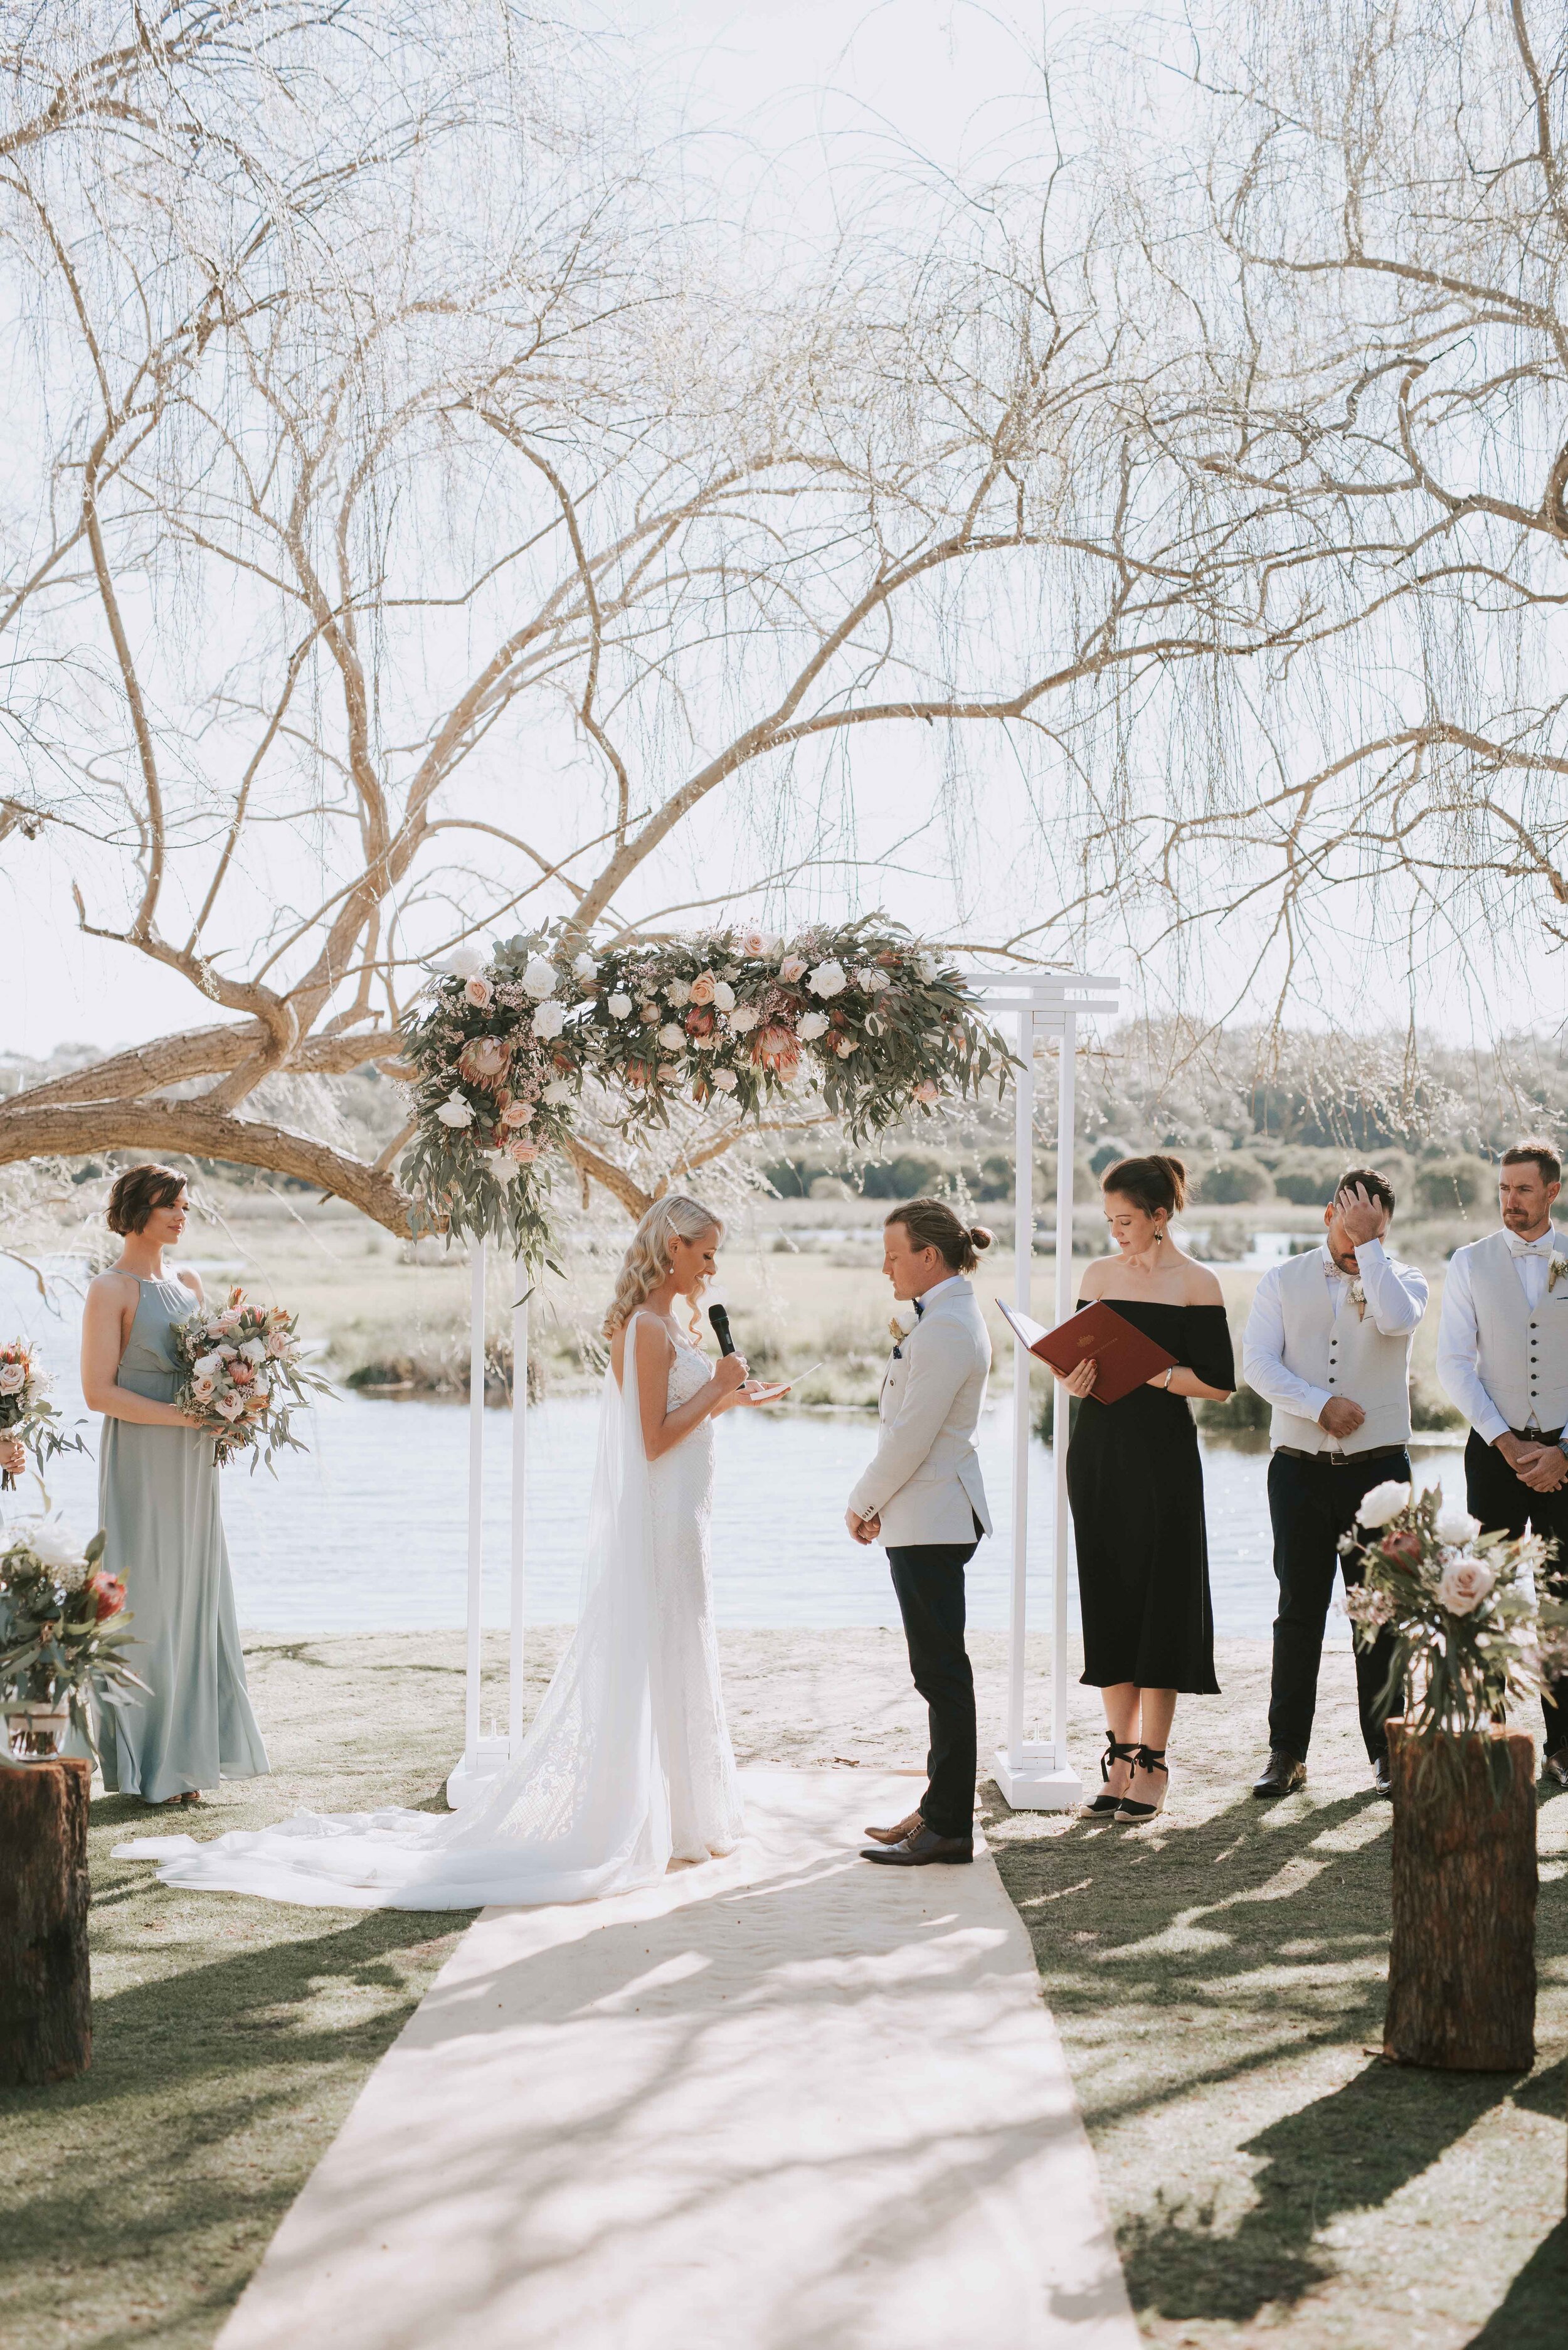 Yanchep park beautiful spring wedding | Perth wedding photographer Amy Skinner-380.jpg